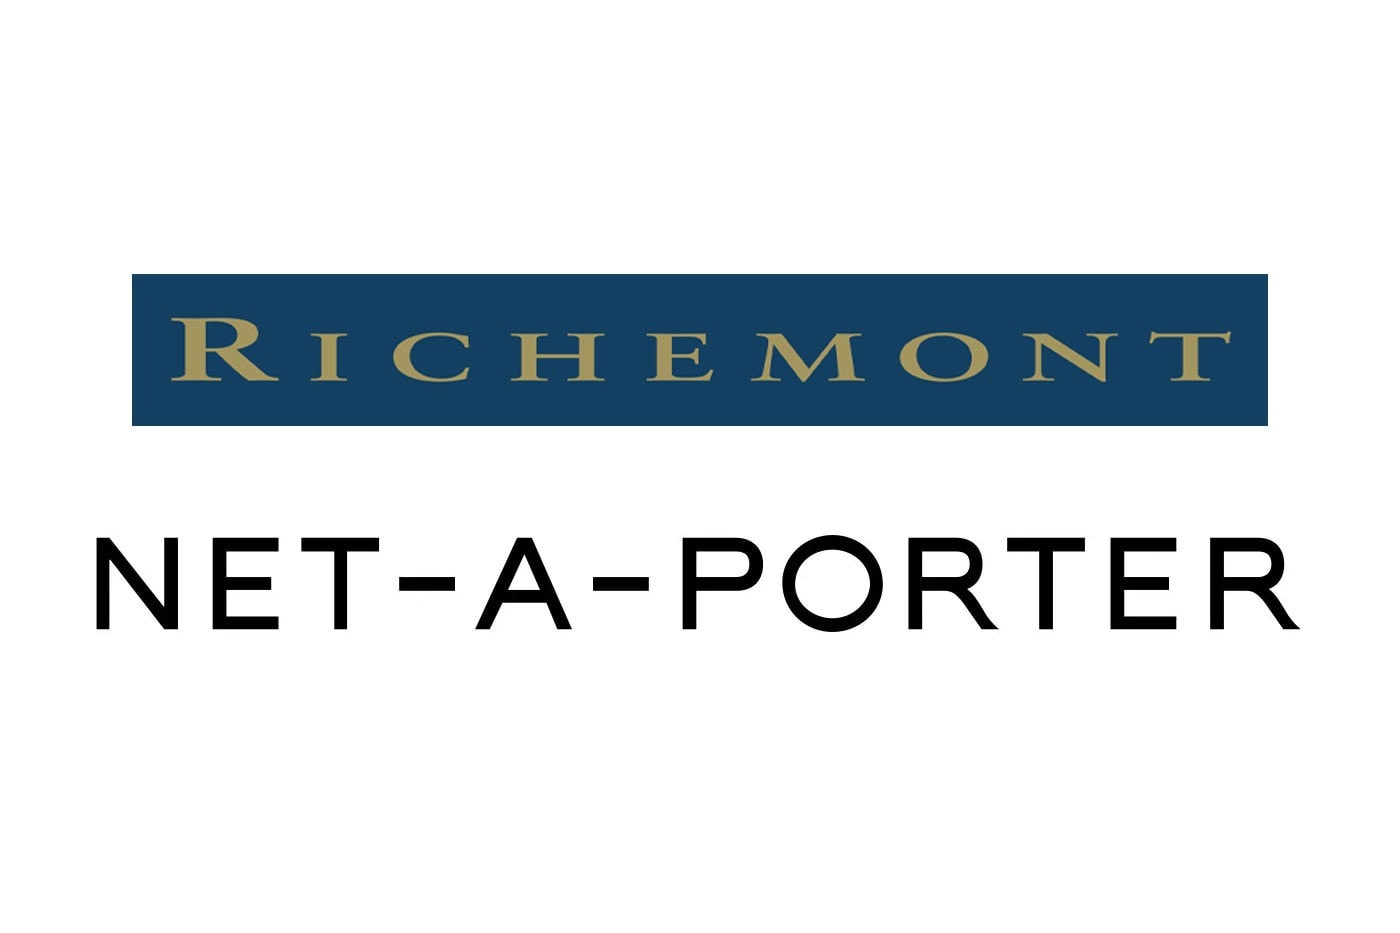 richemont net a porter farfetch brands retailing industry 